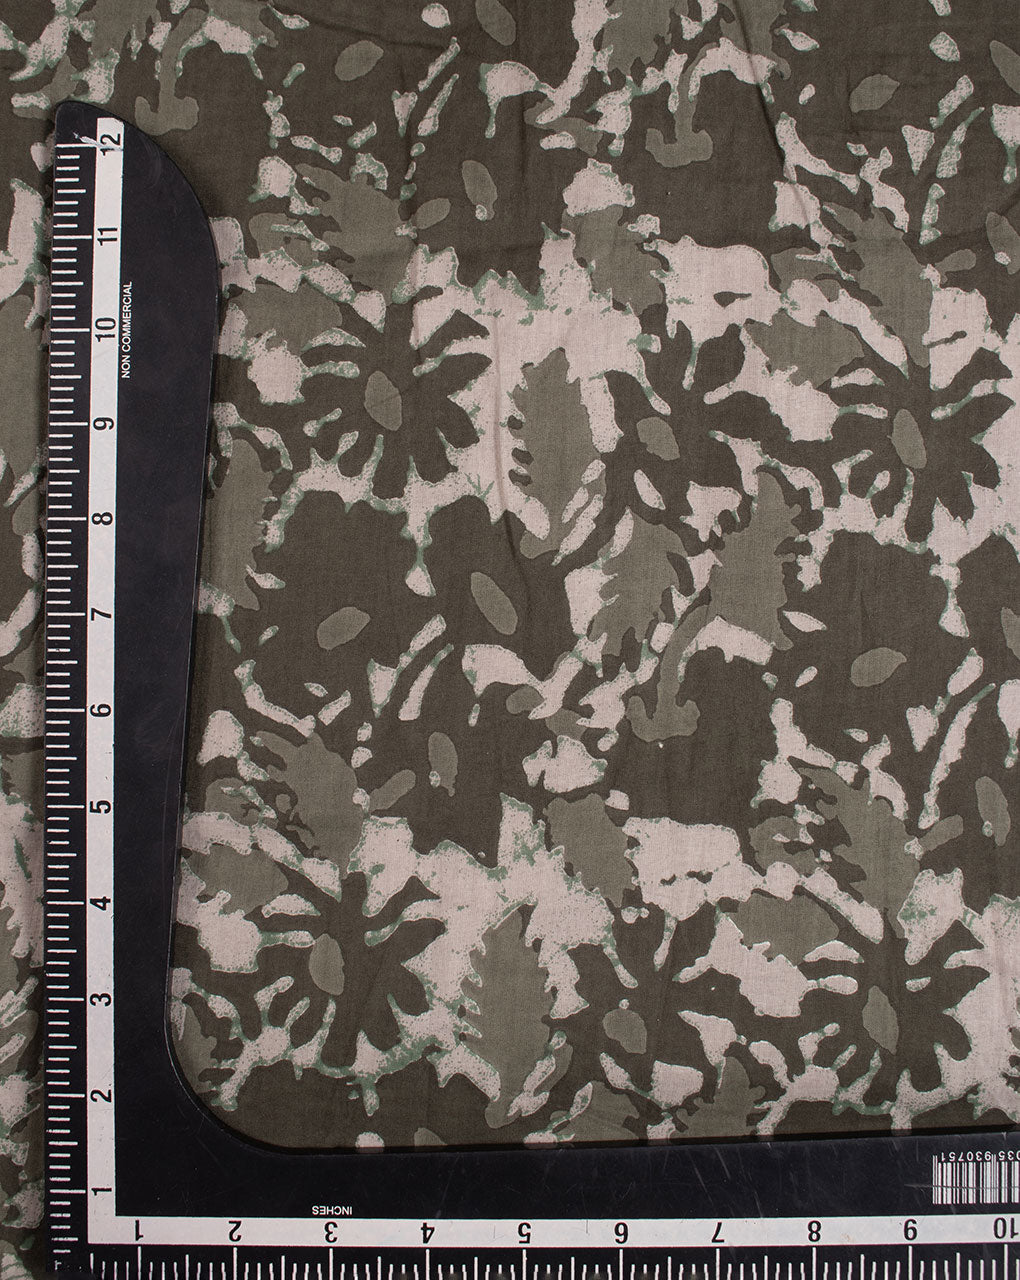 Floral Screen Print Cotton Fabric - Fabriclore.com